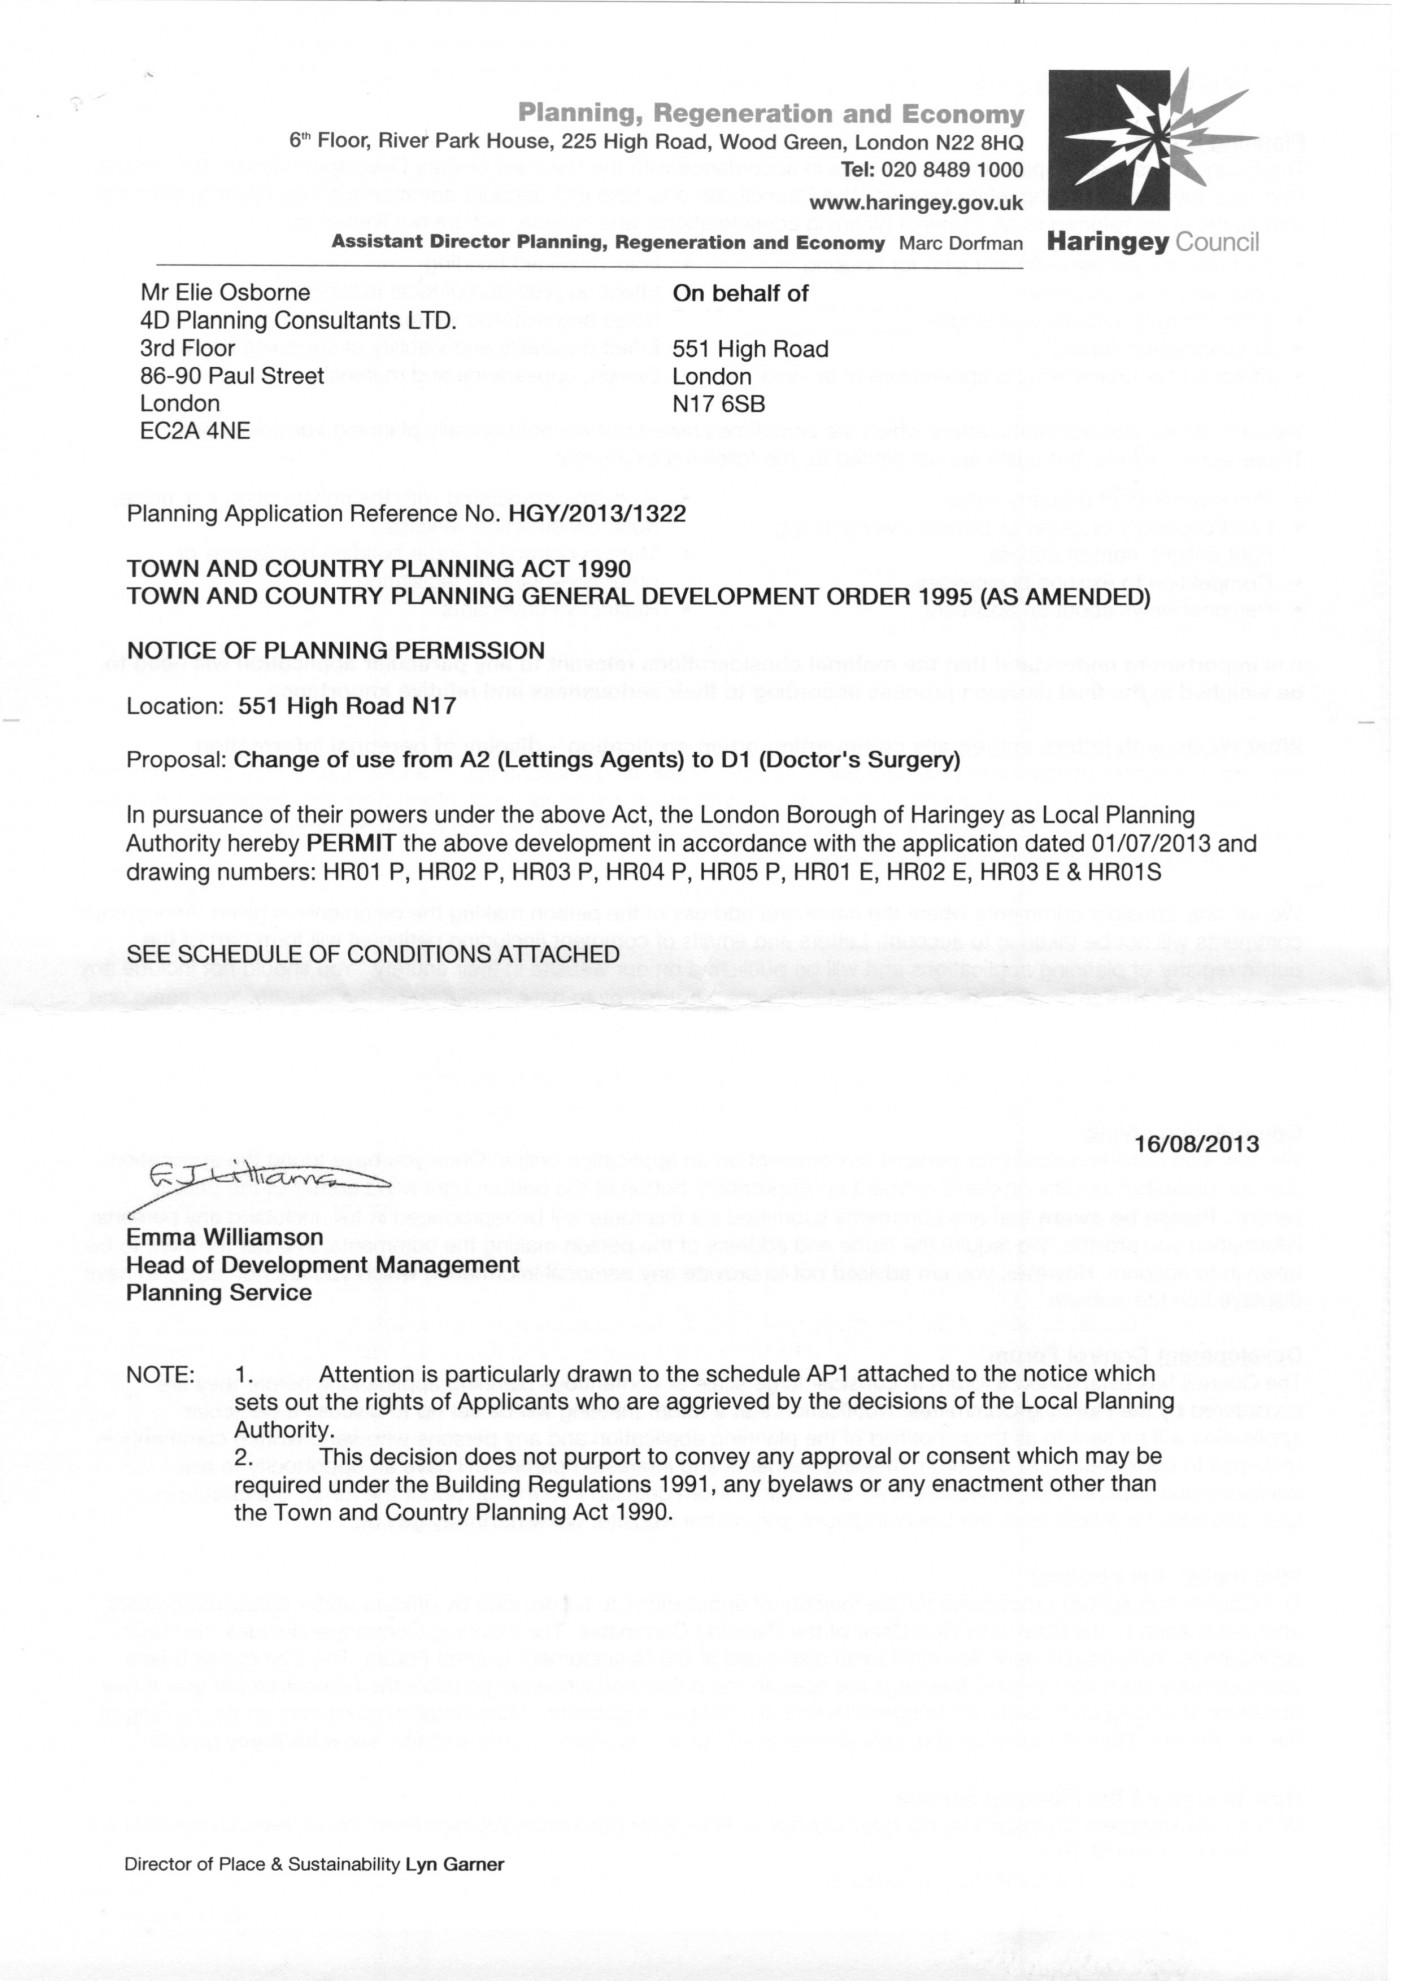 Haringey Council Decision Notice - Granted Planning Permission